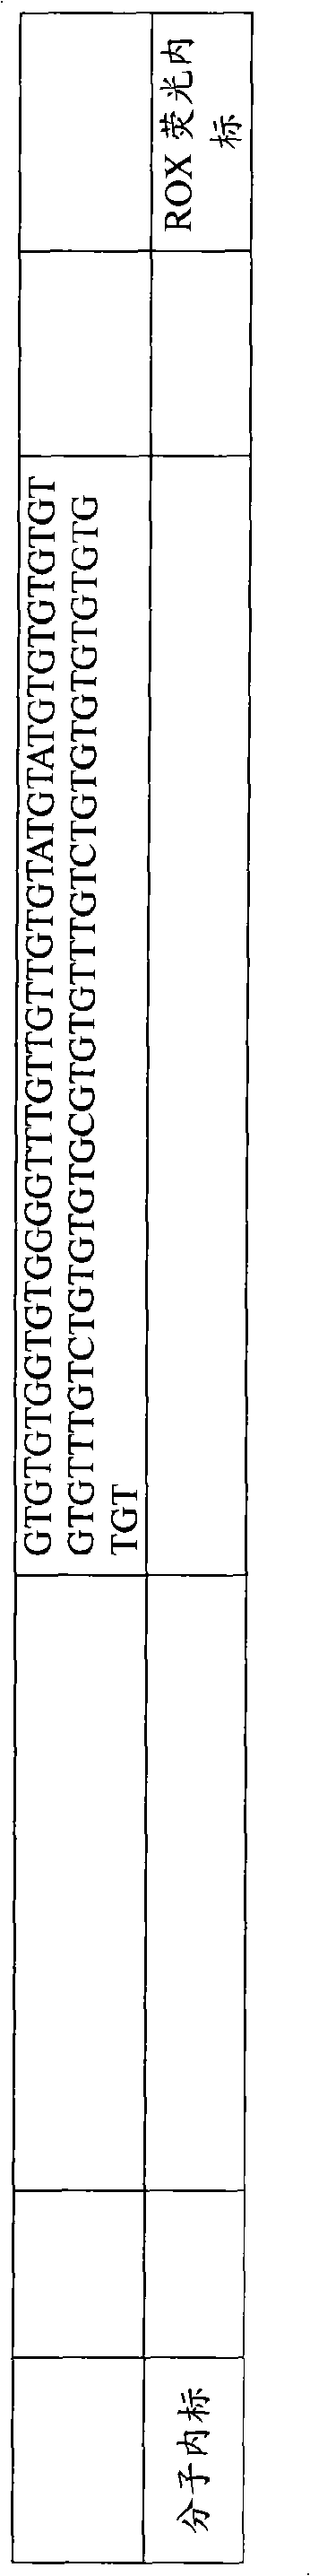 Turbot fluorescence labeling microsatellite sextuple PCR family tree recognizing method